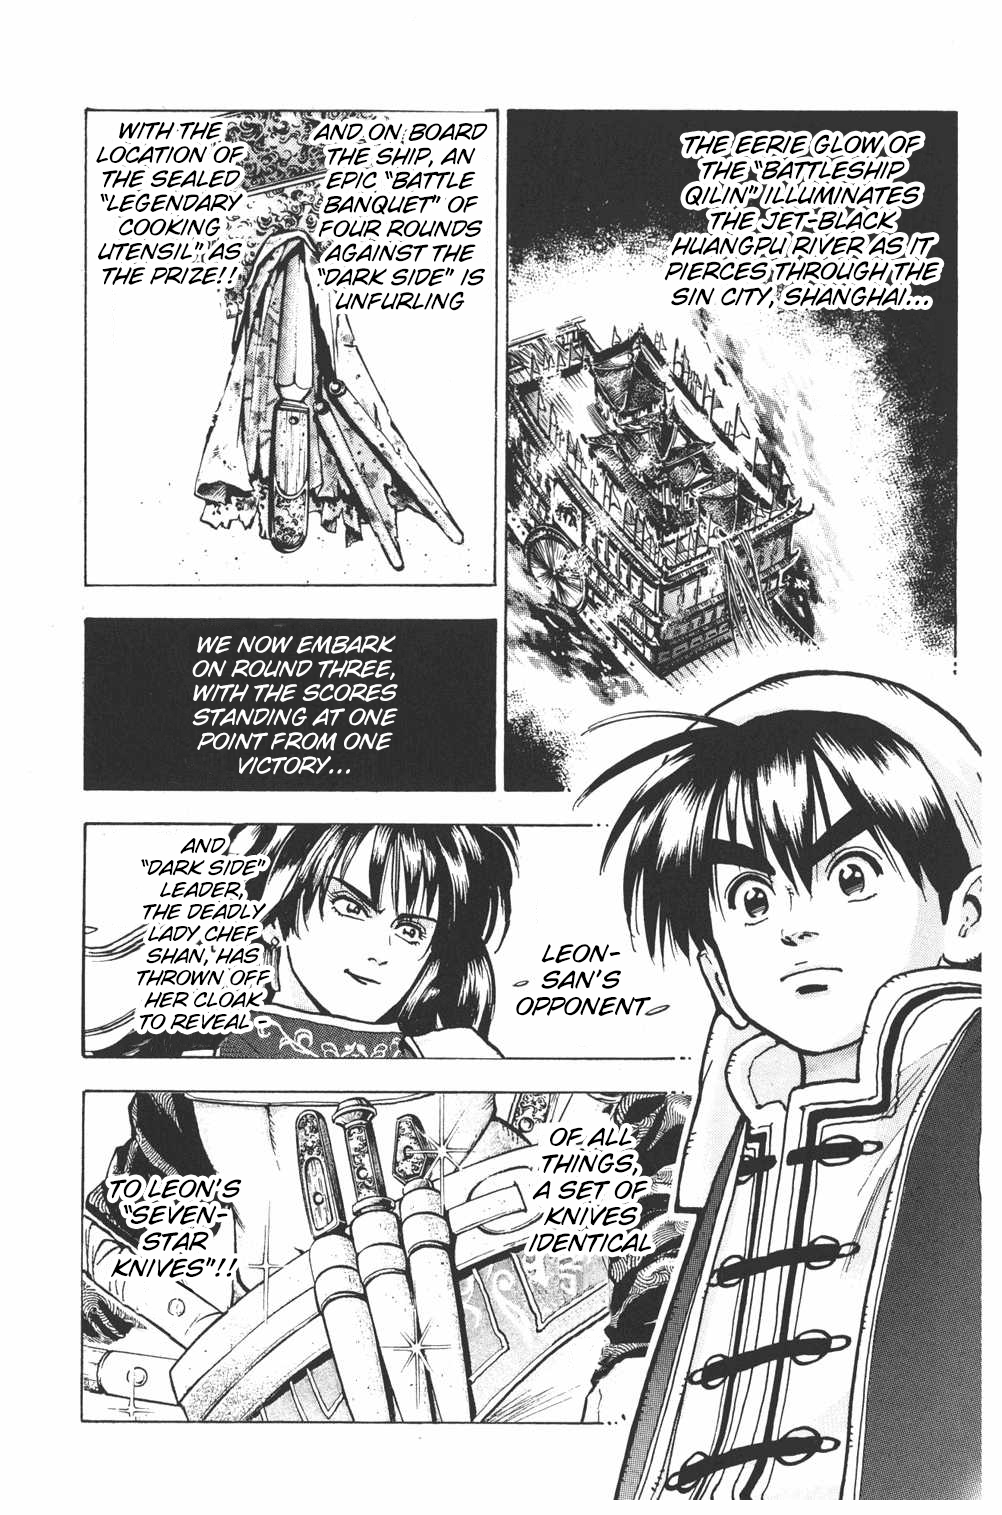 Shin Chuuka Ichiban! Vol. 5 Ch. 39 The "Seven Star Knives" of Destiny